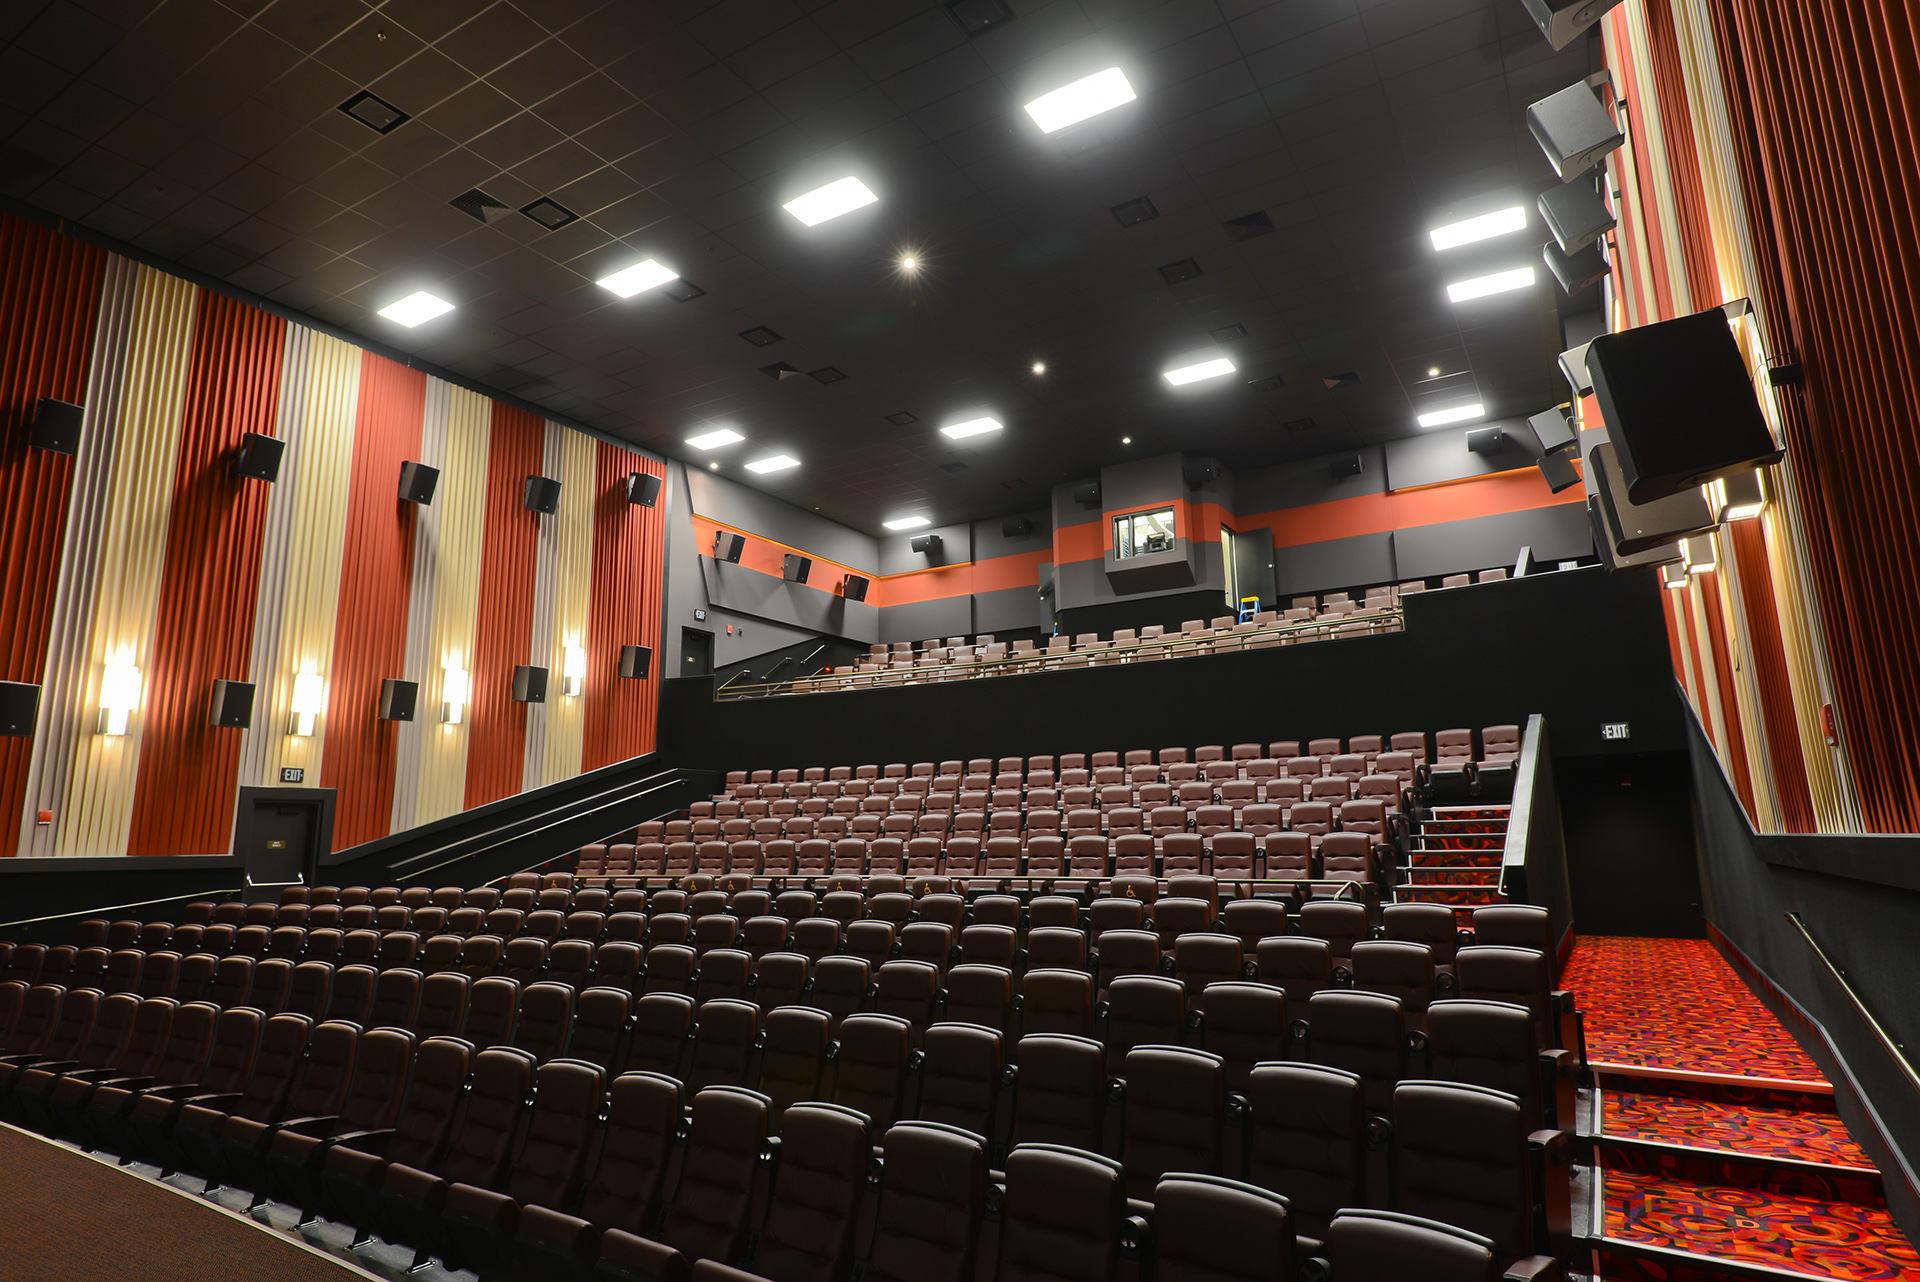 Cinemark Next Generation Theatre at Towson Square TN Ward Company